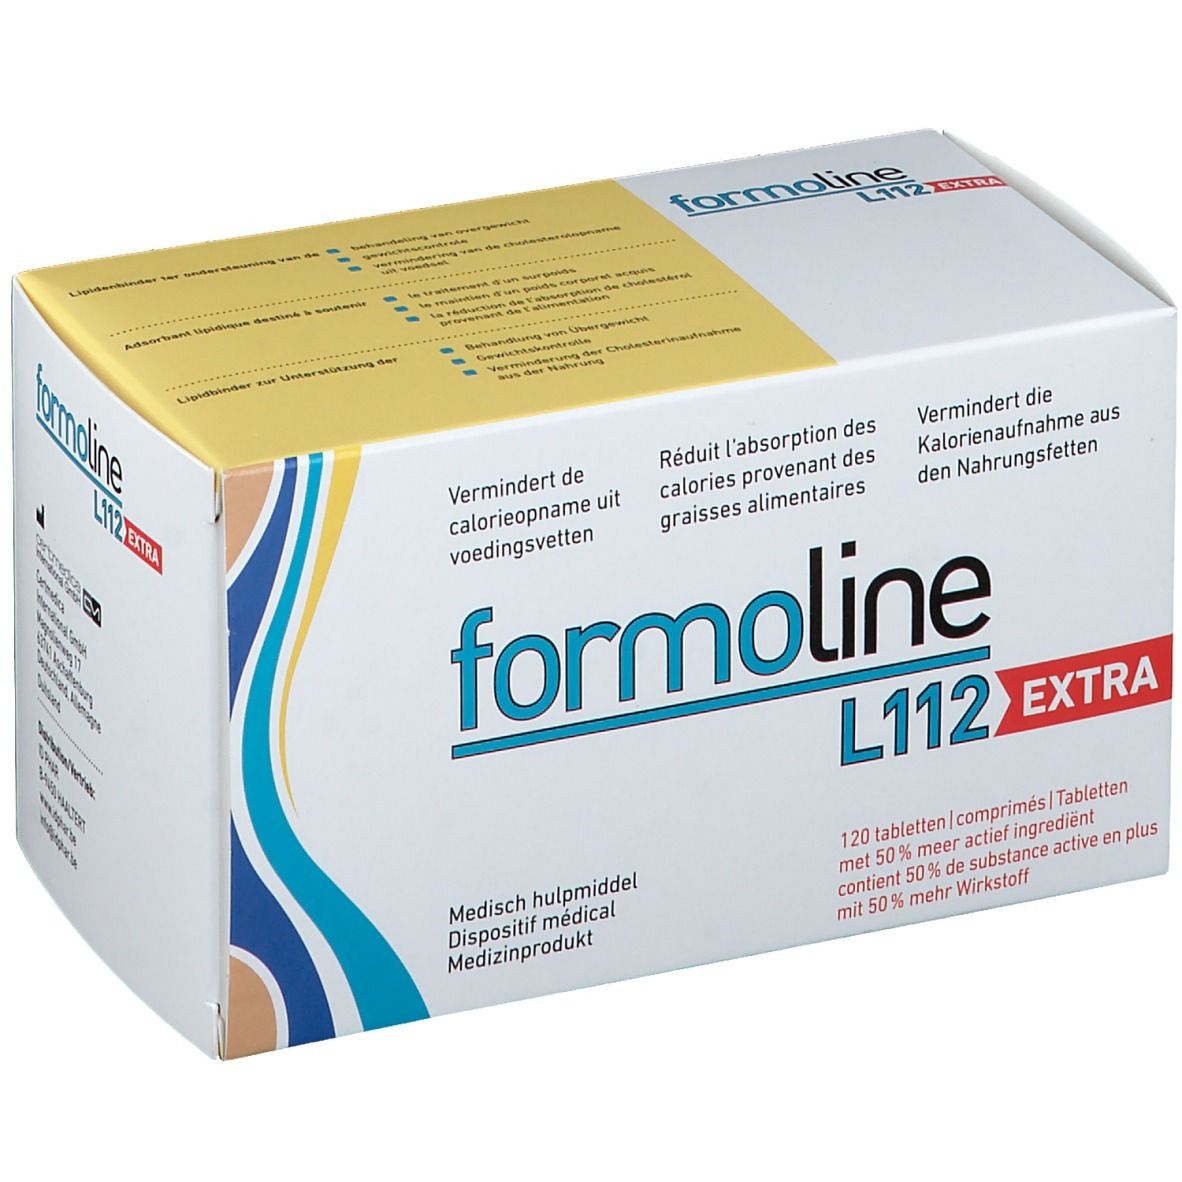 Formoline L112 Extra